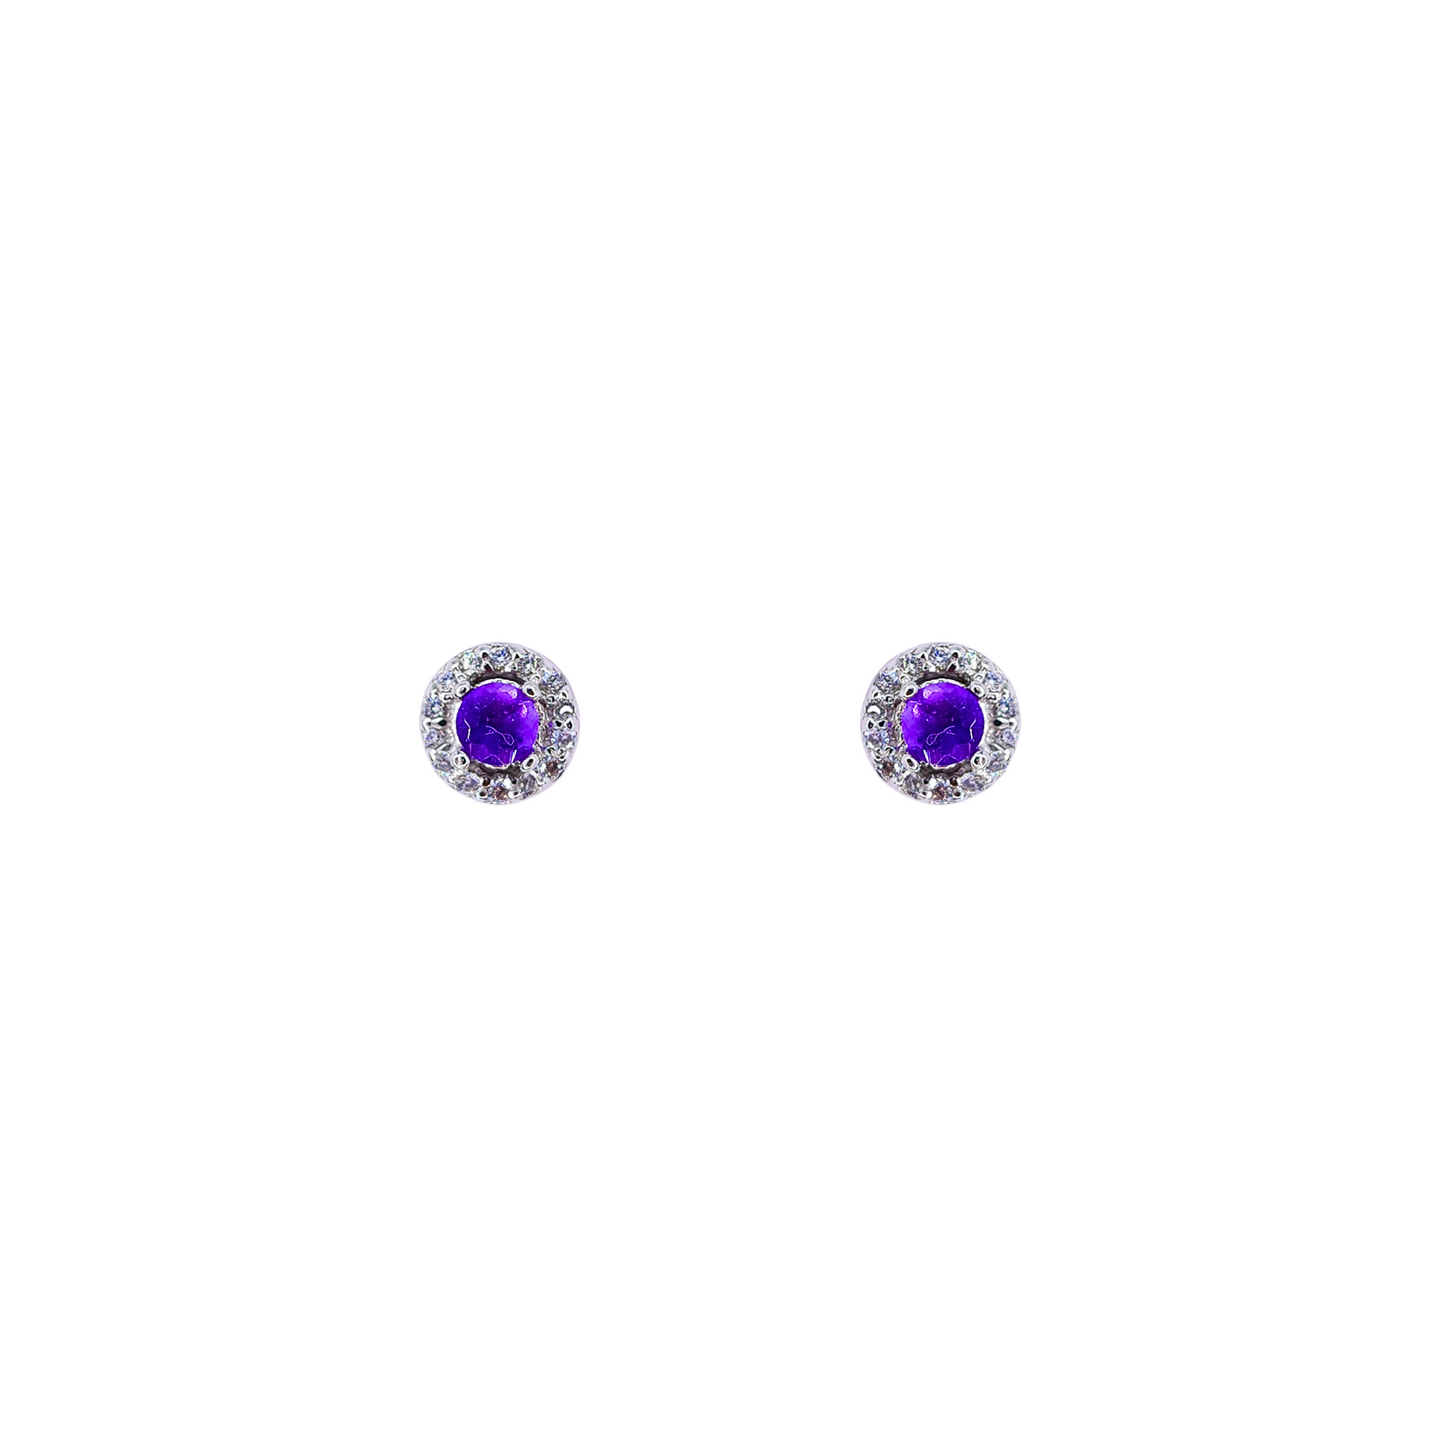 Round amethyst stone earrings